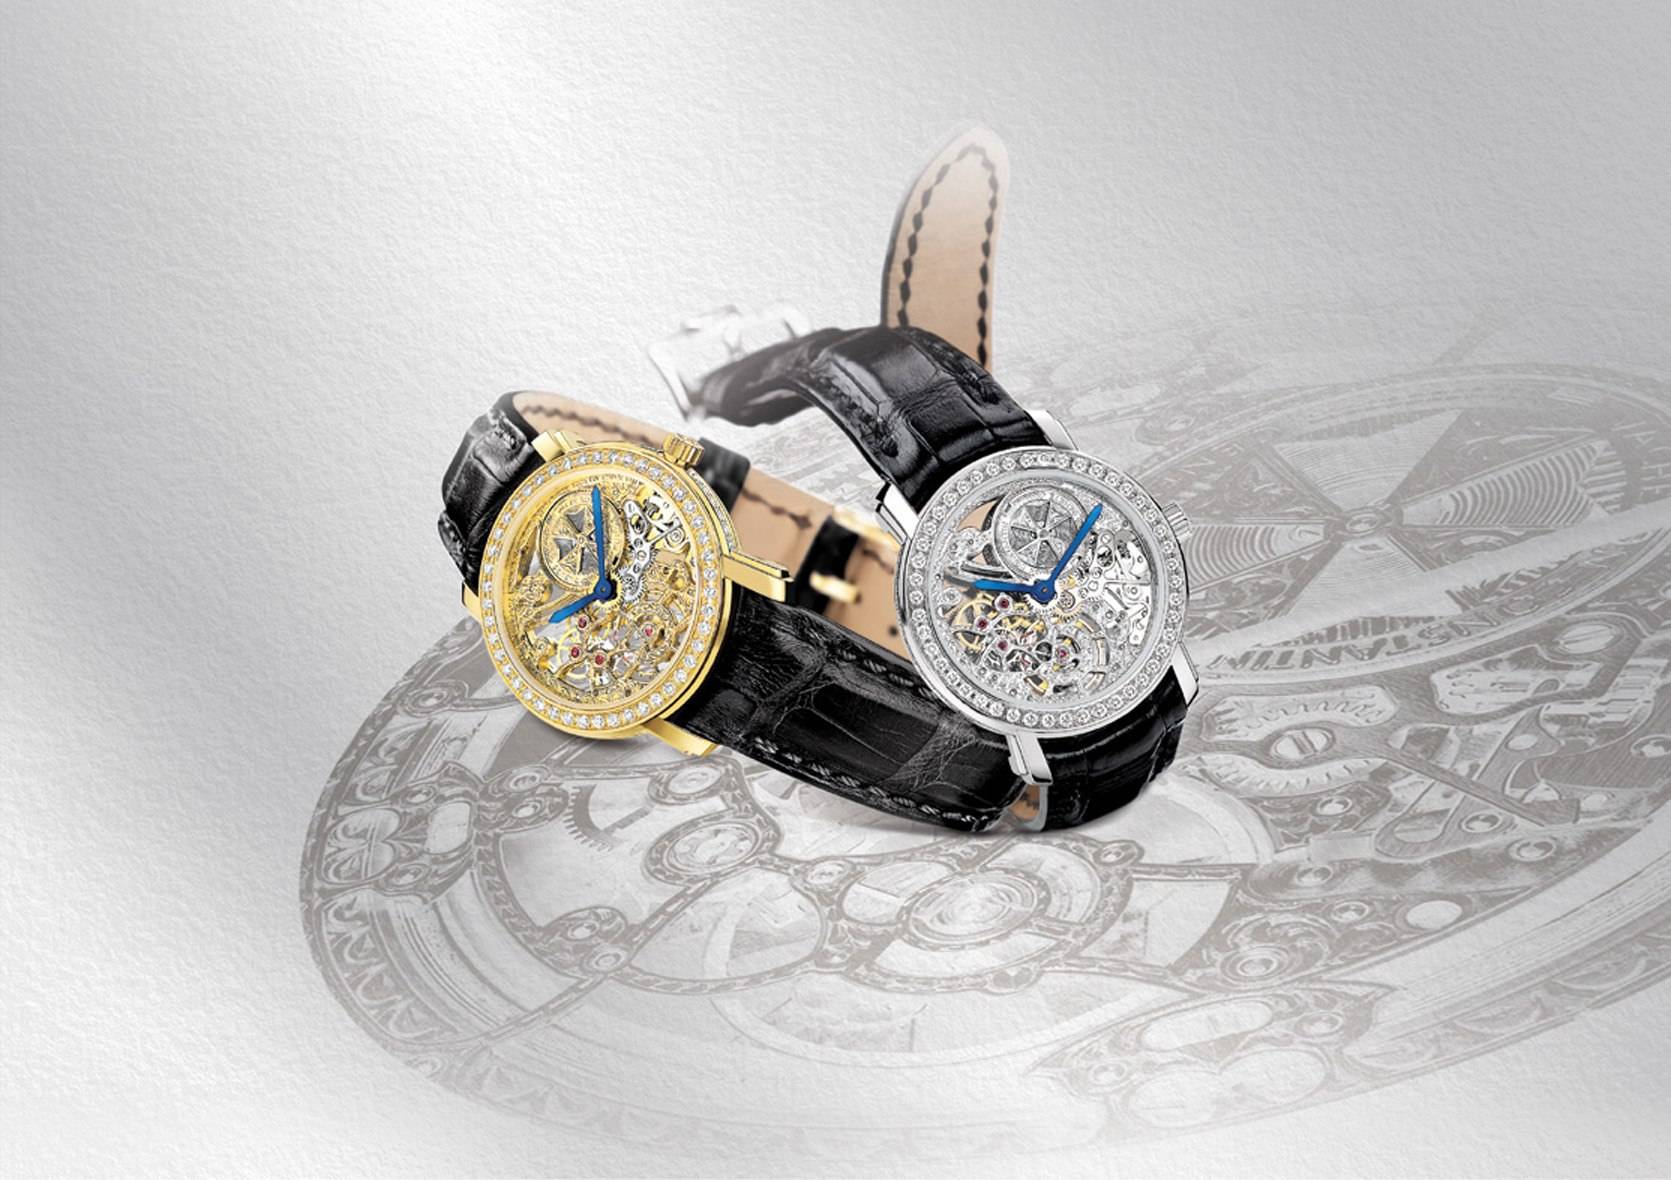 Best Open Worked Watches of 2013 - Luxury Watch Trends 2018 ...